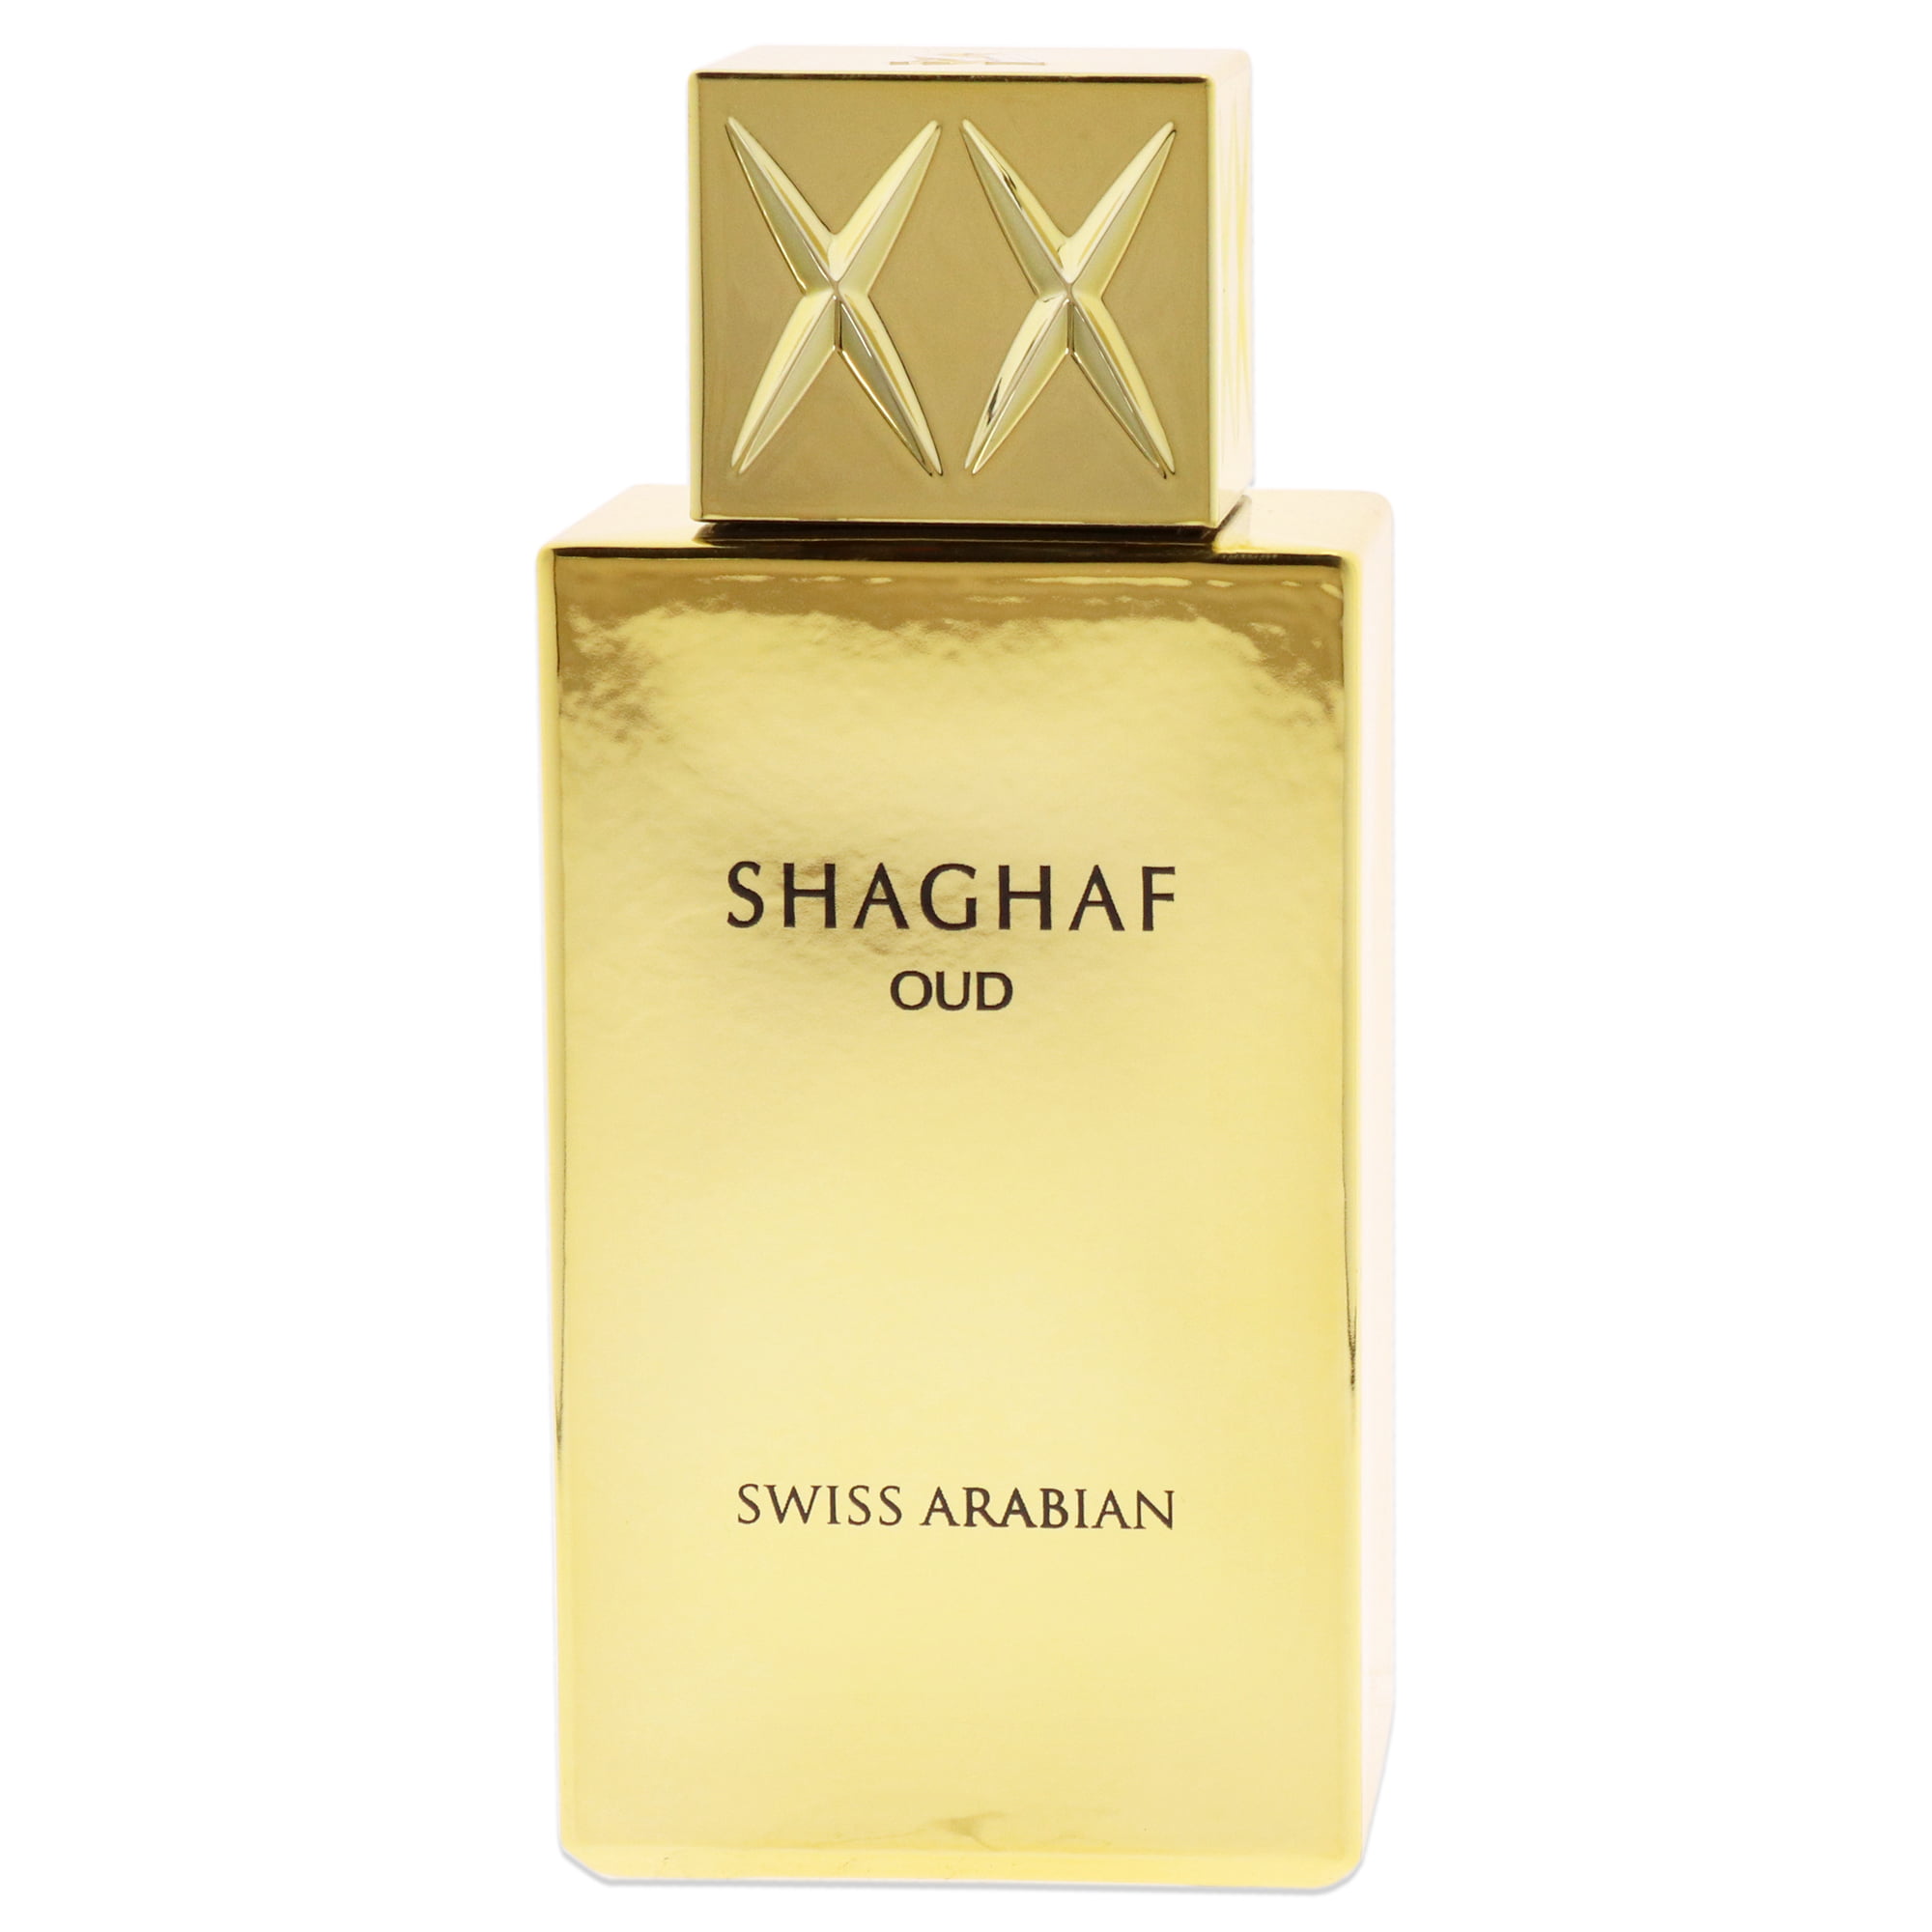 Shaghaf Oud Swiss Arabian perfume - a fragrance for women and men